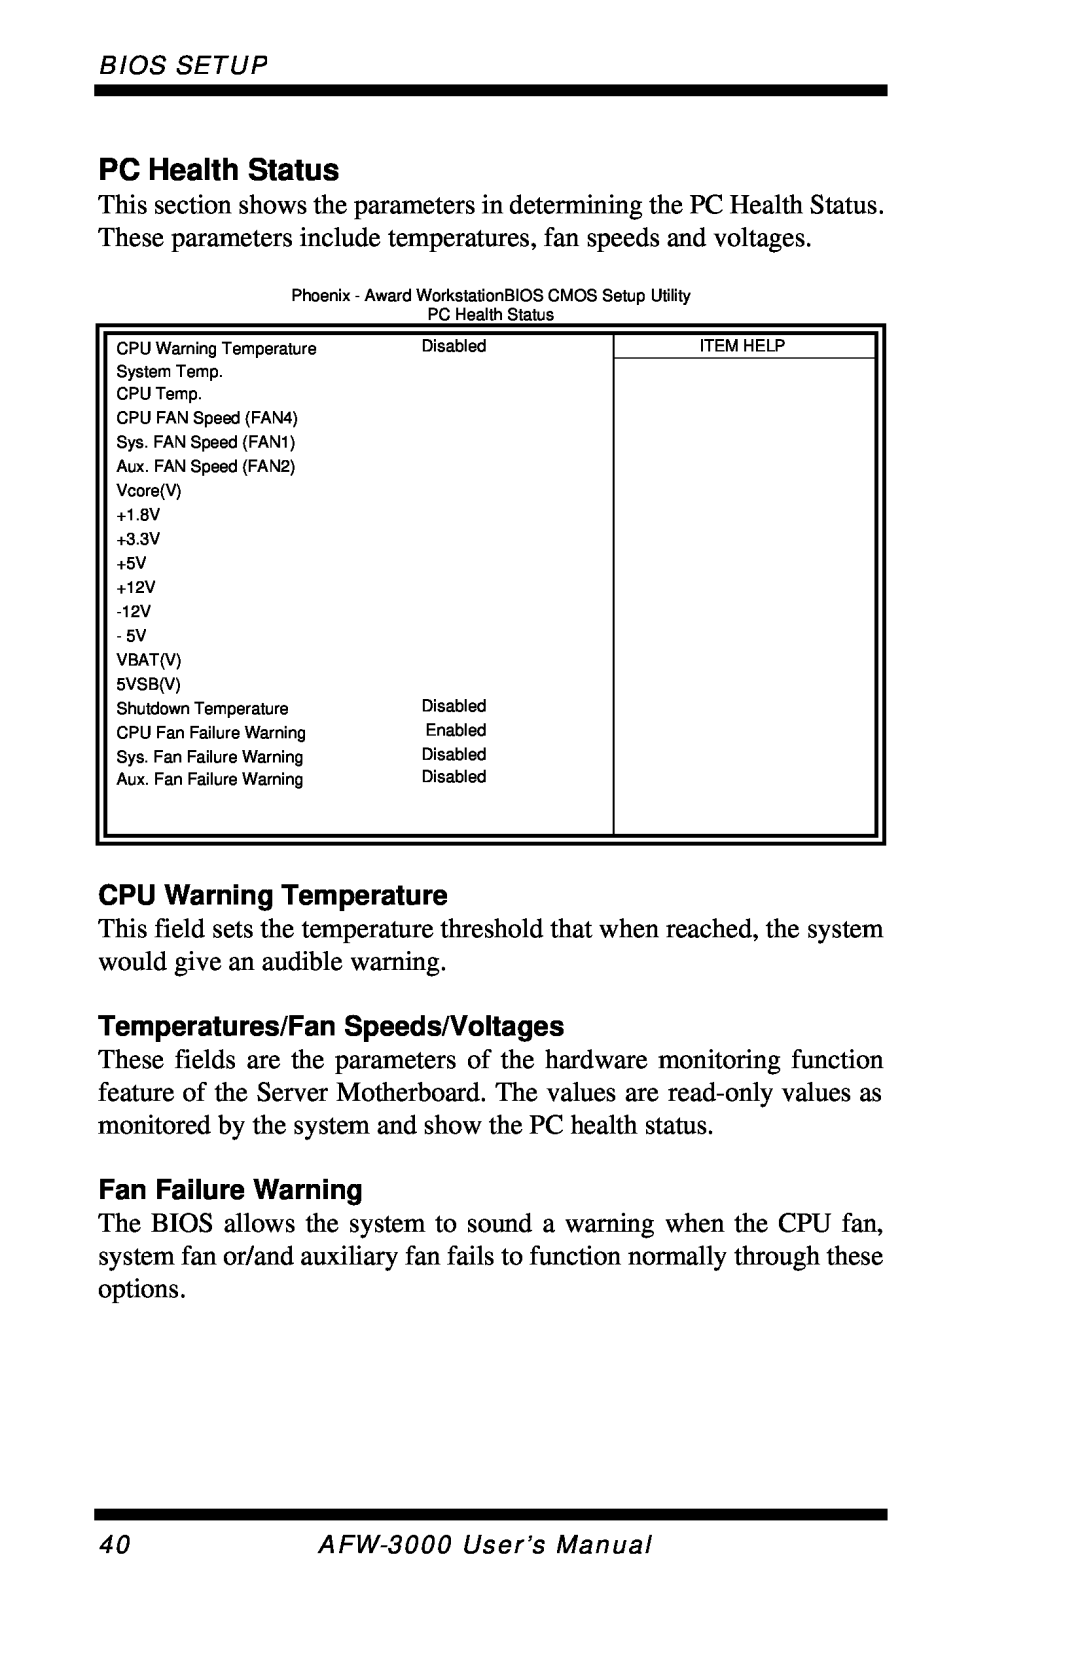 Intel E7501 user manual PC Health Status, CPU Warning Temperature, Temperatures/Fan Speeds/Voltages, Fan Failure Warning 